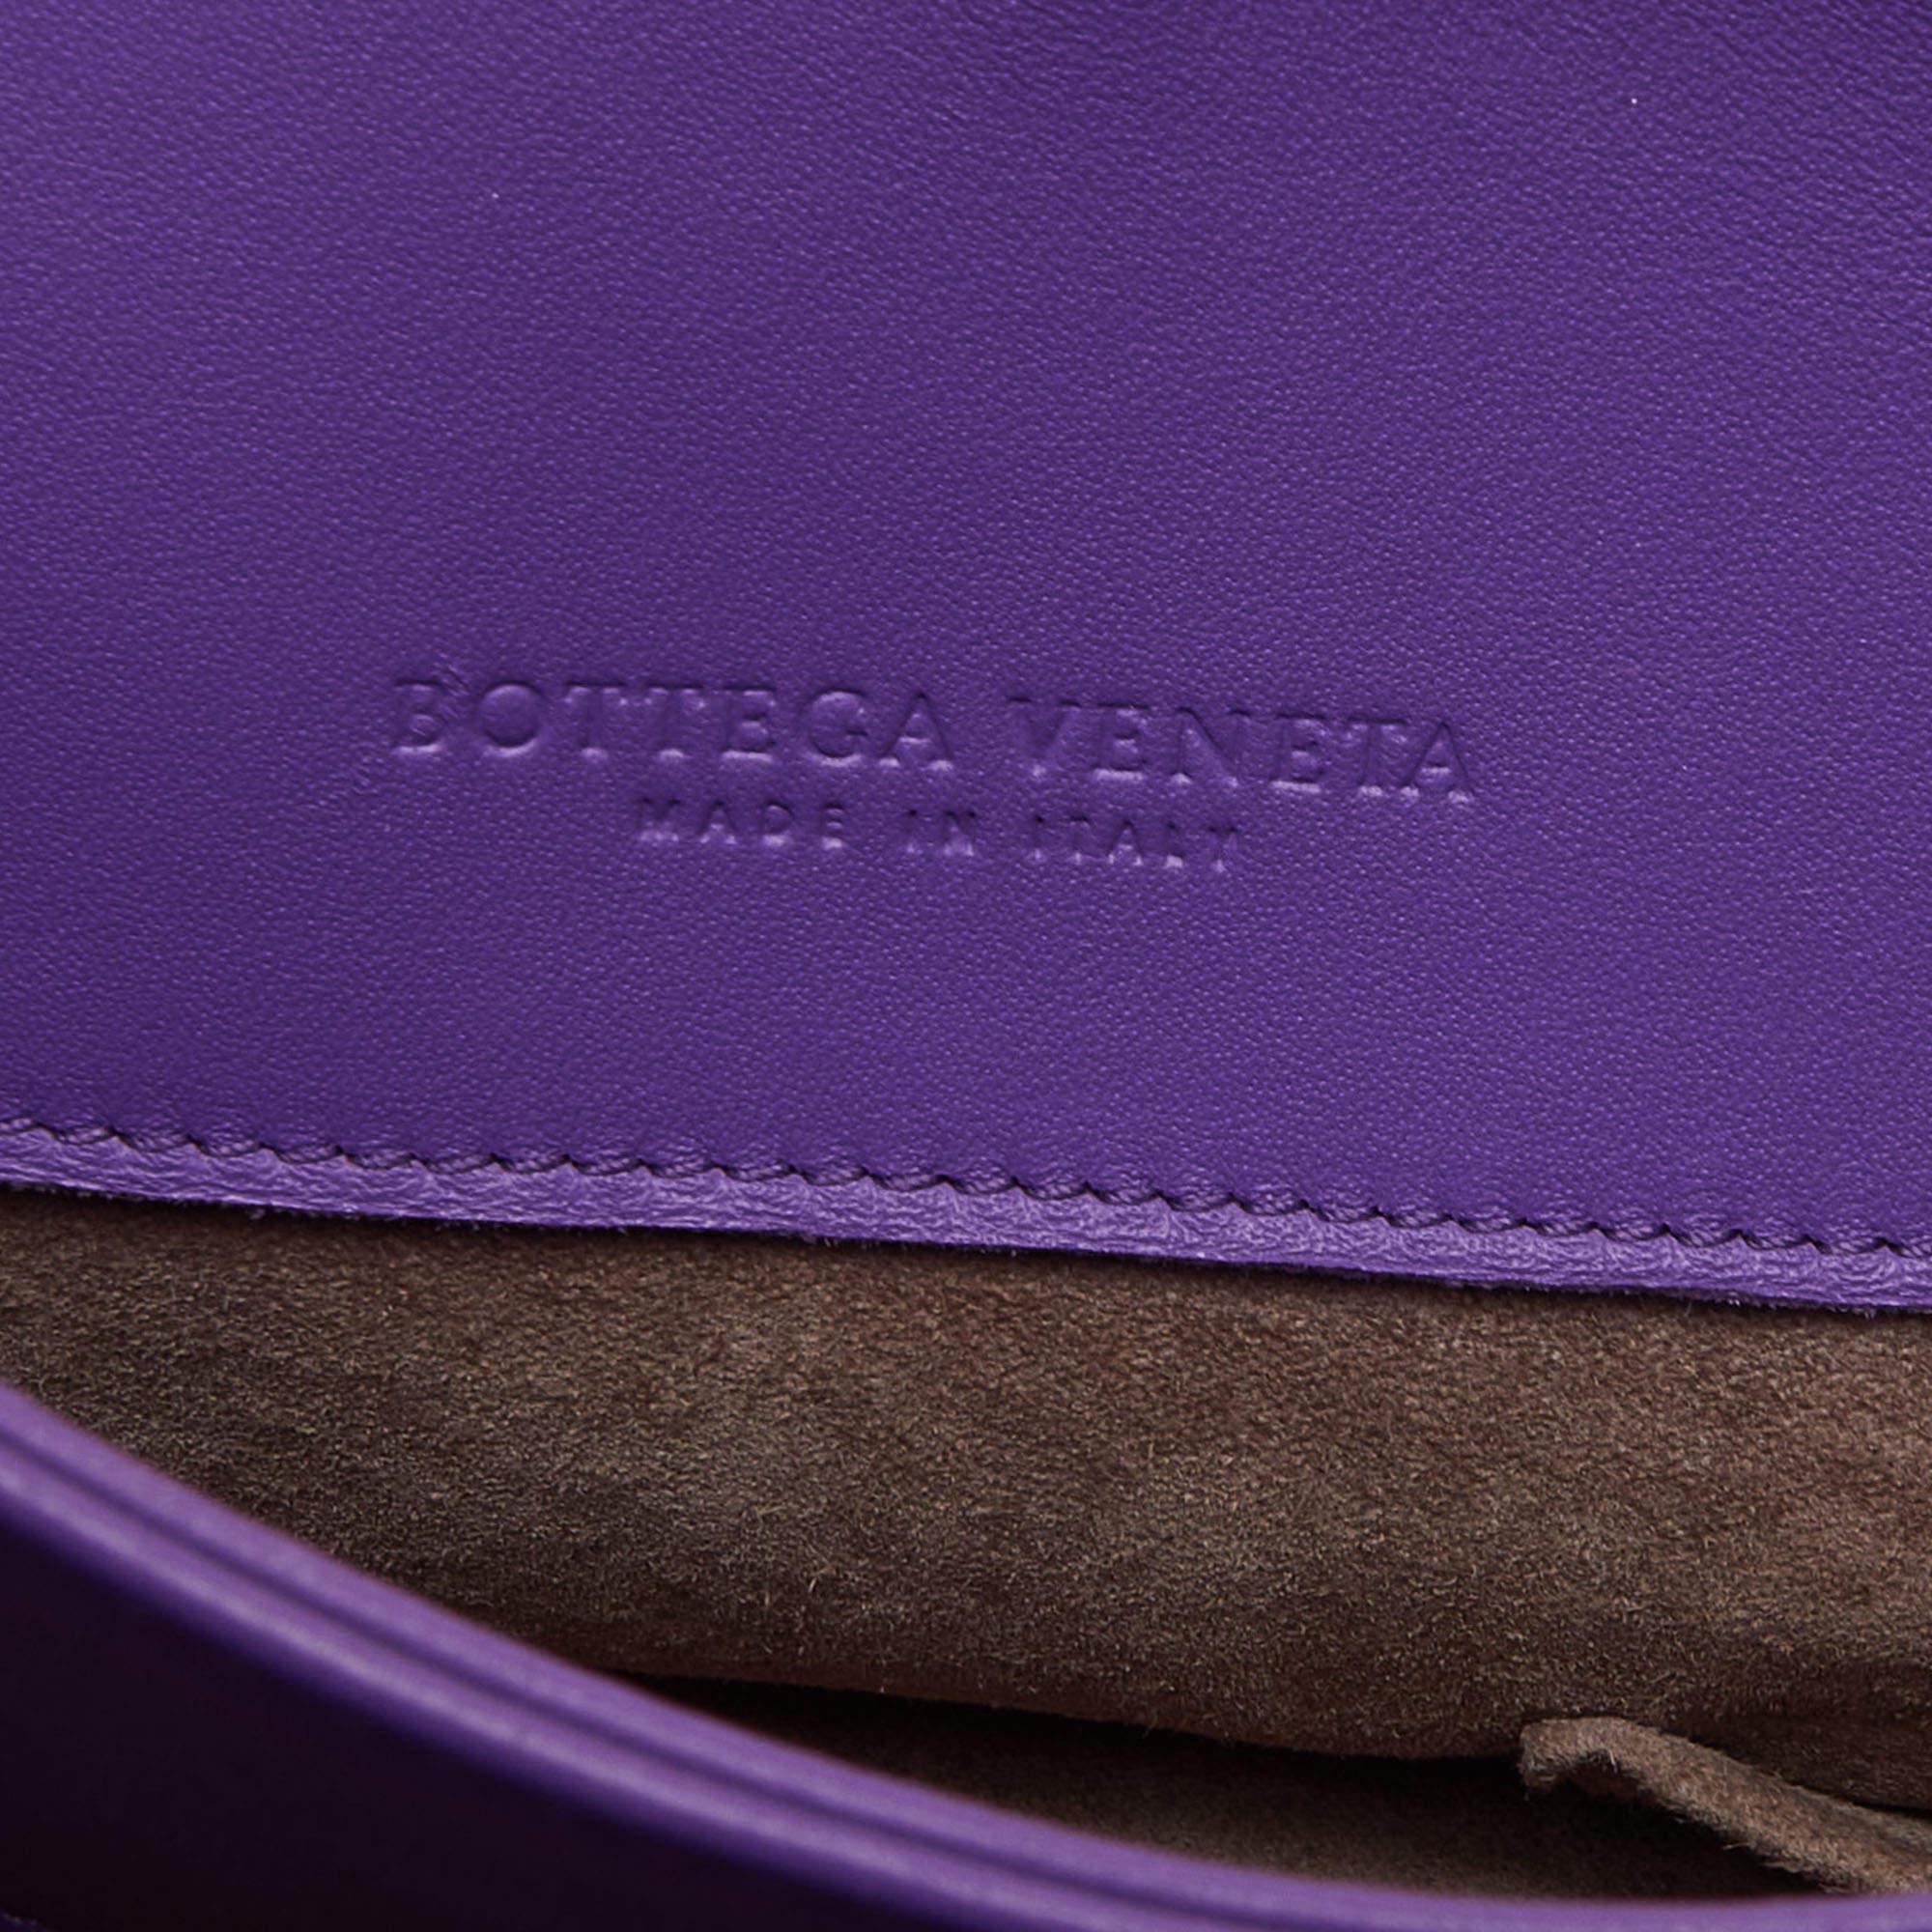 Bottega Veneta Purple Intrecciato Leather Tote 3